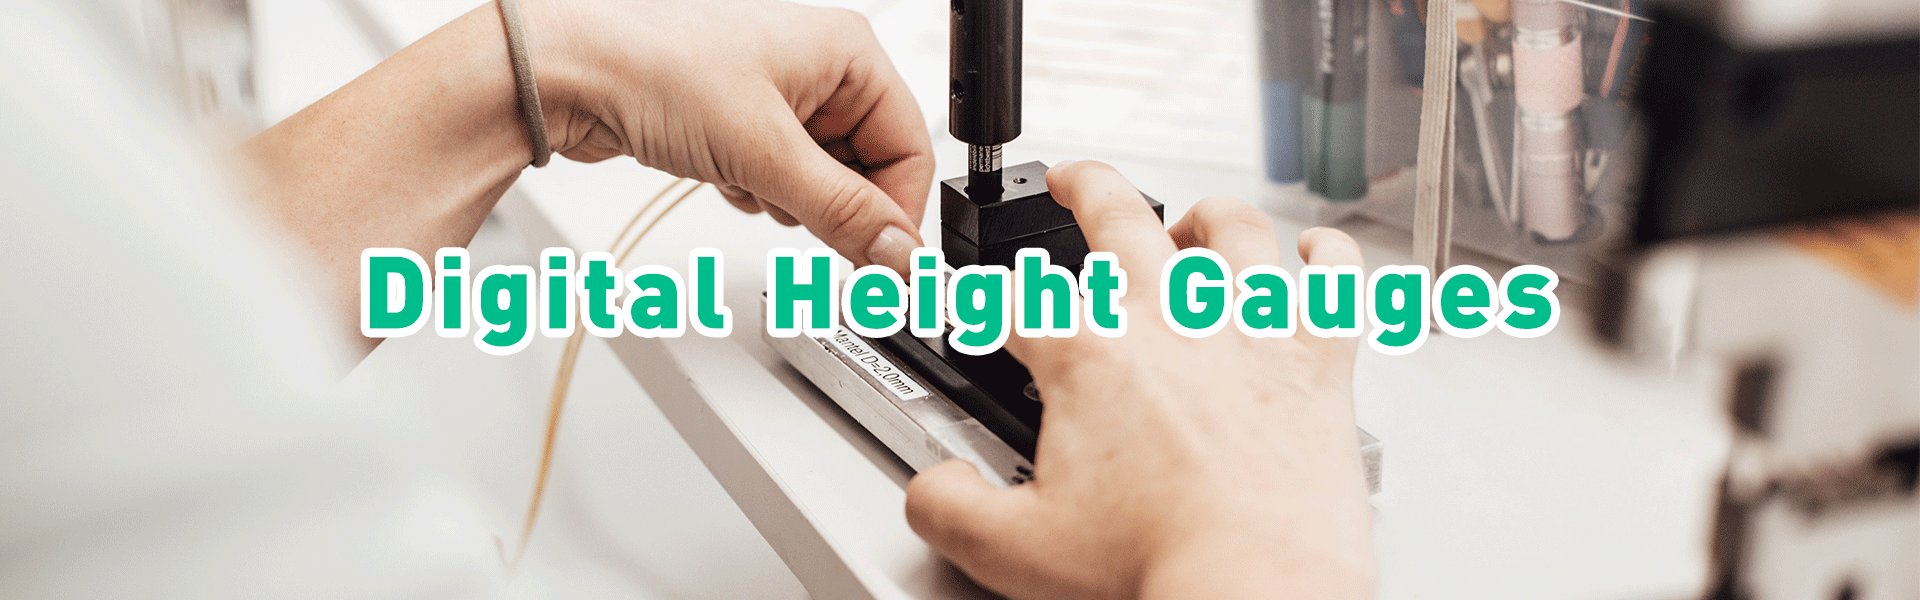 Digital Height Gauge